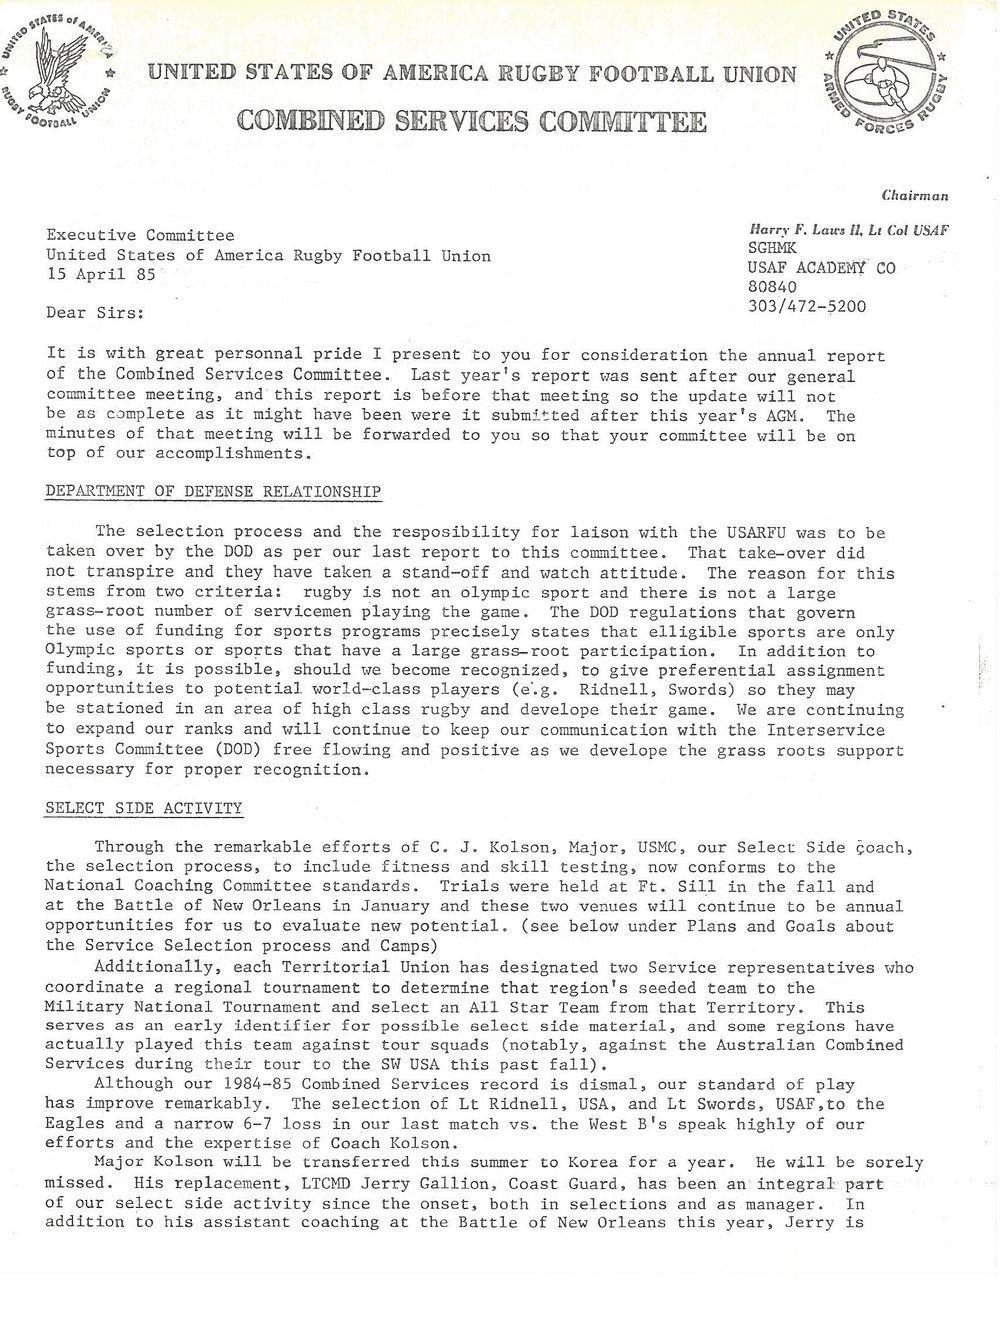 1985 04 CS report to USA RFU 1.jpg